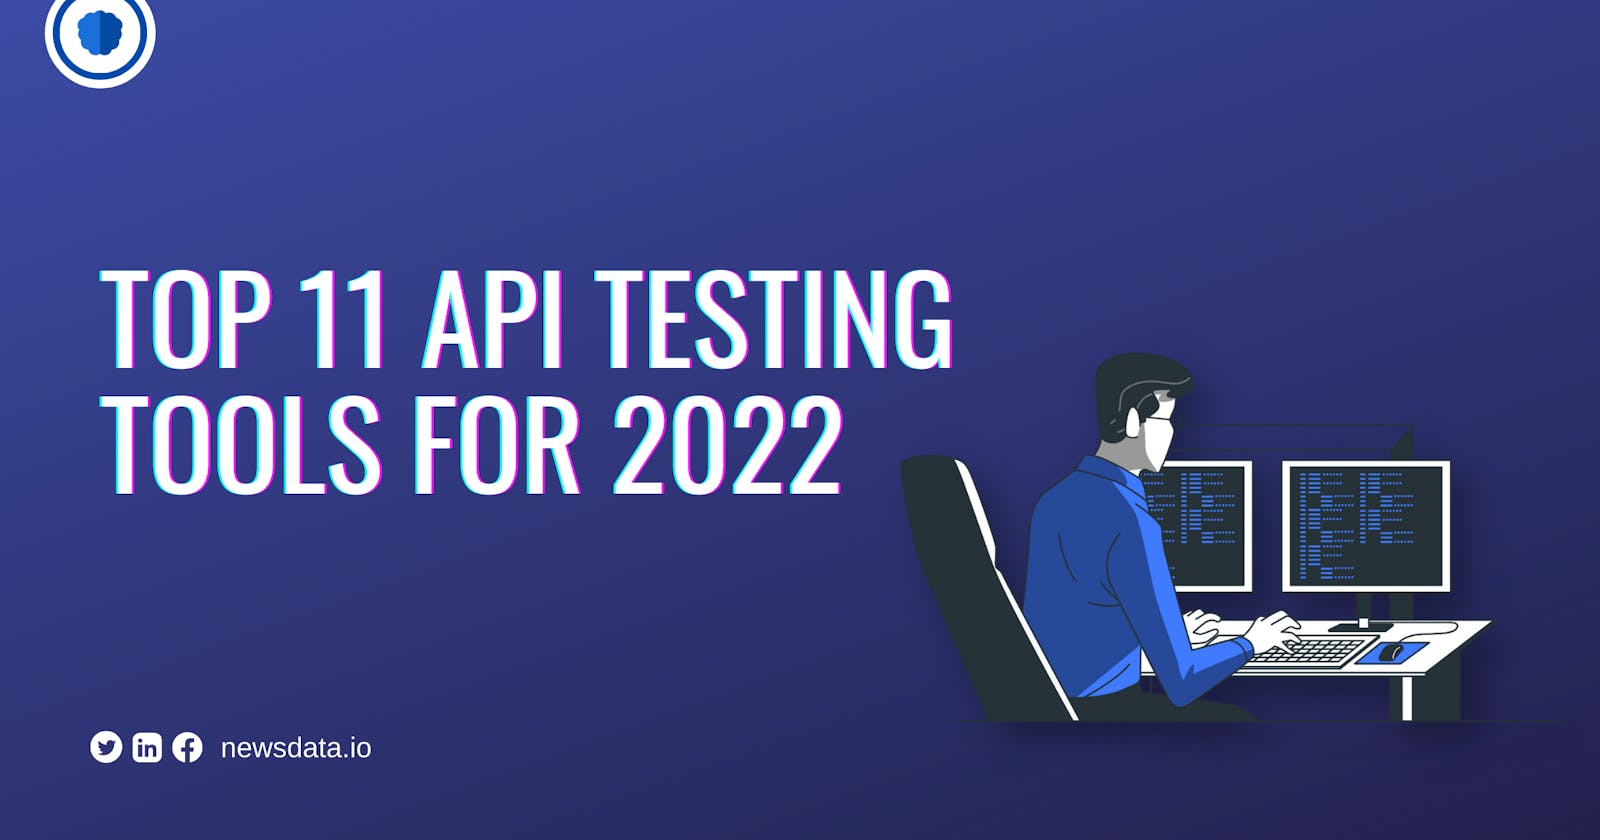 Top 11 API Testing Tools For 2022